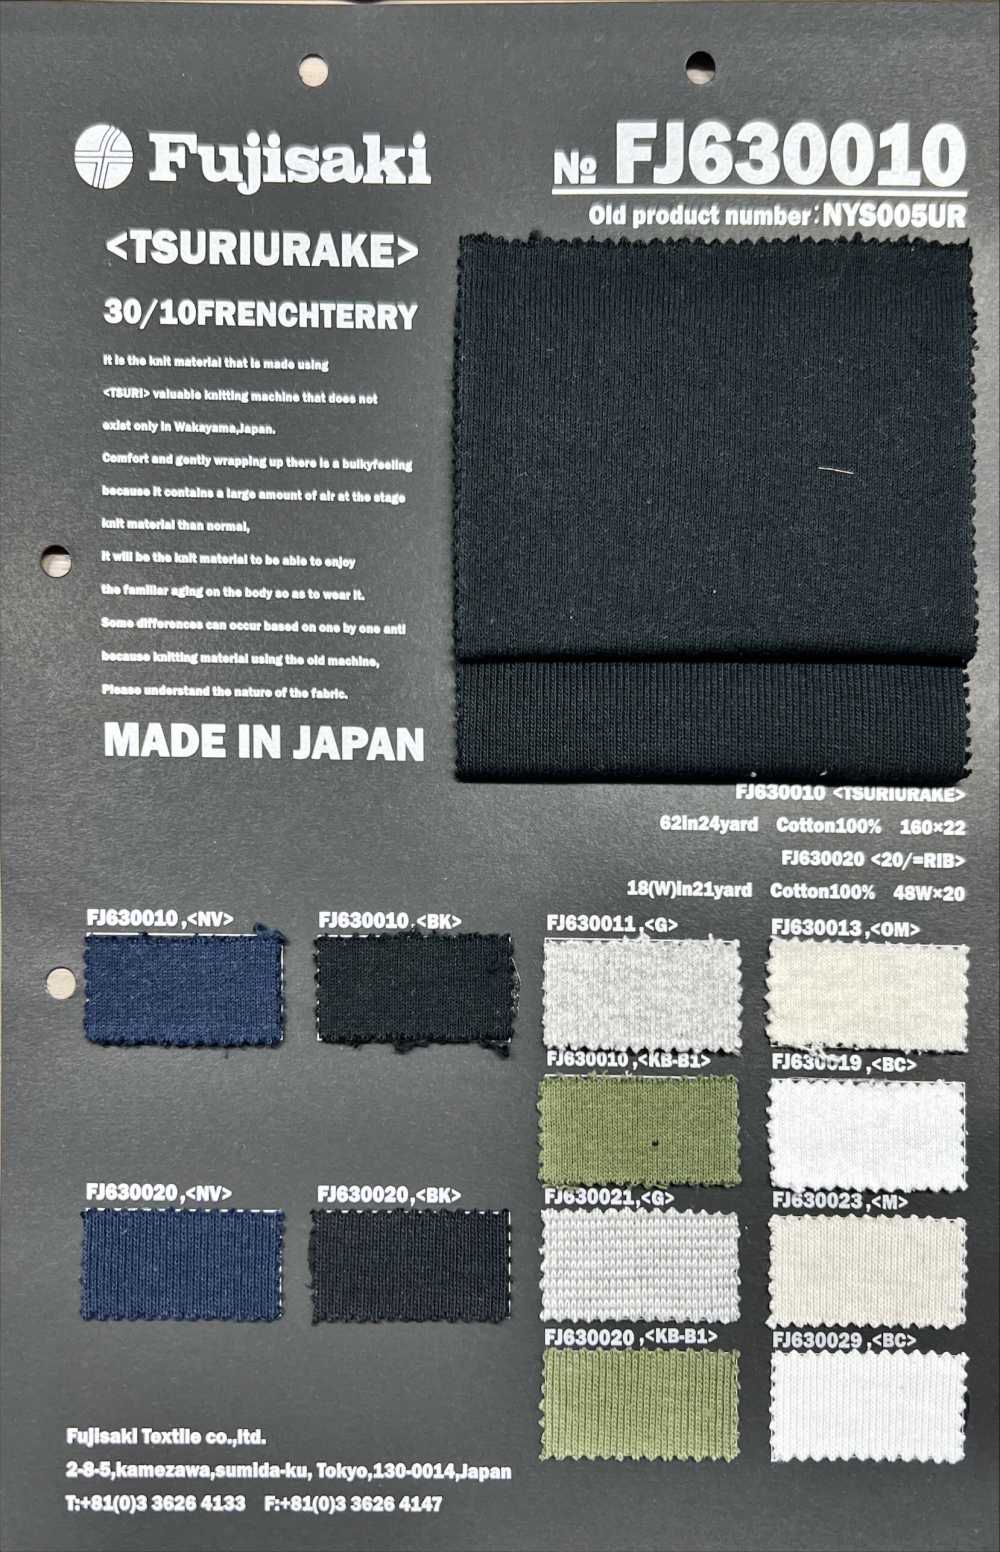 FJ630011 Vải Vải Thun Nỉ Cắt May Gỗ Cừu Fujisaki Textile